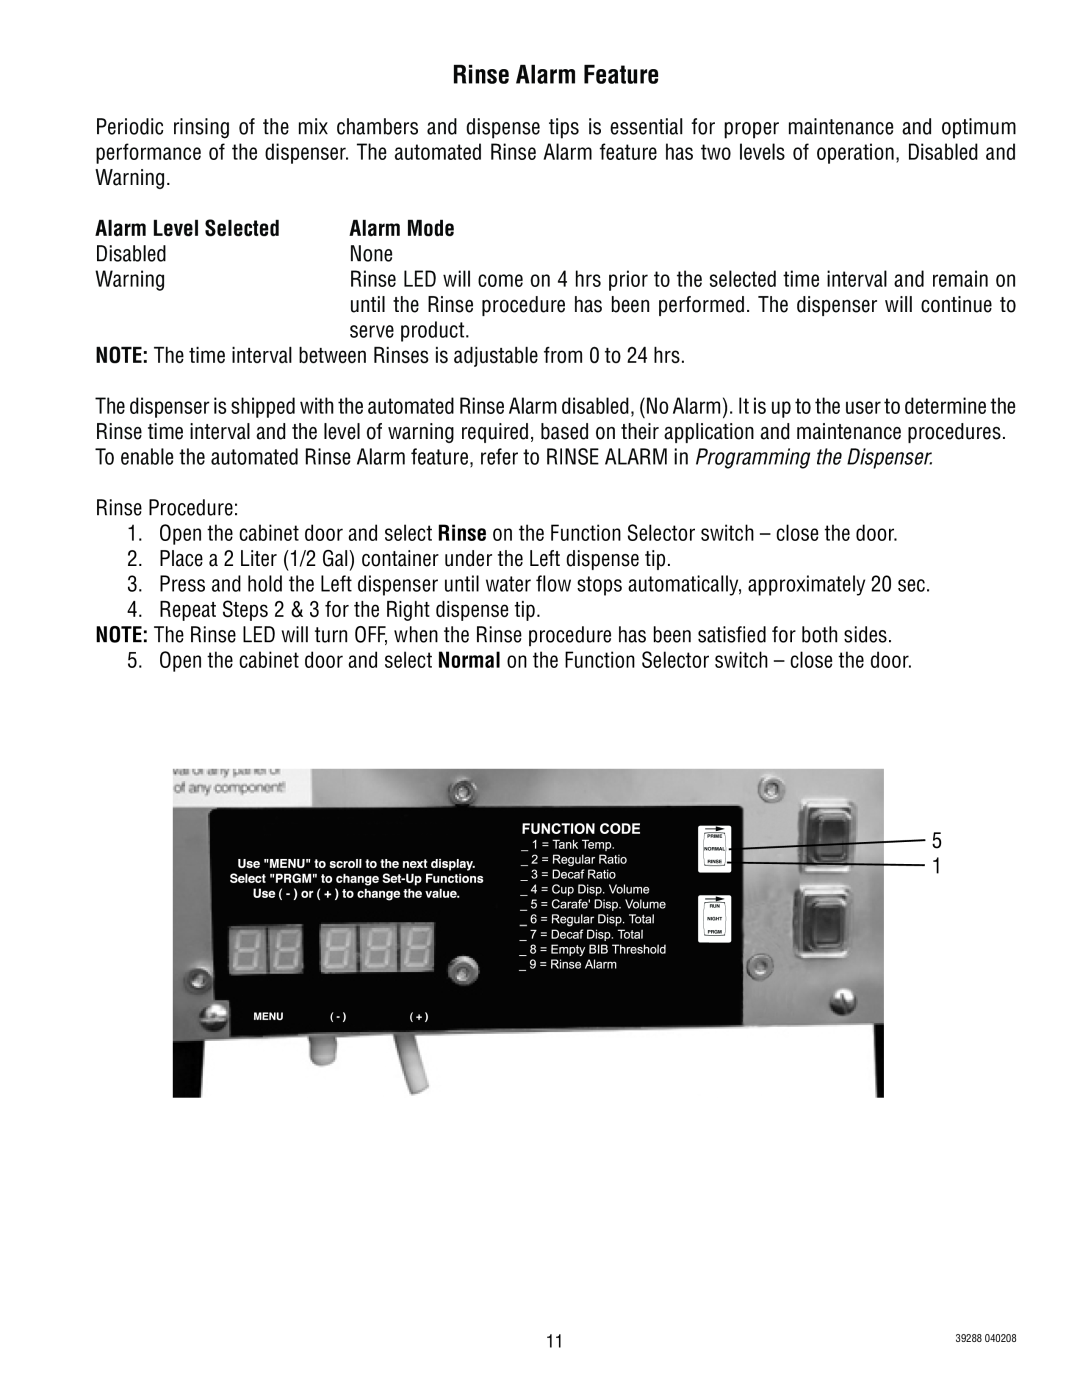 Bunn LCC-2 service manual Rinse Alarm Feature, Alarm Level Selected, Alarm Mode 